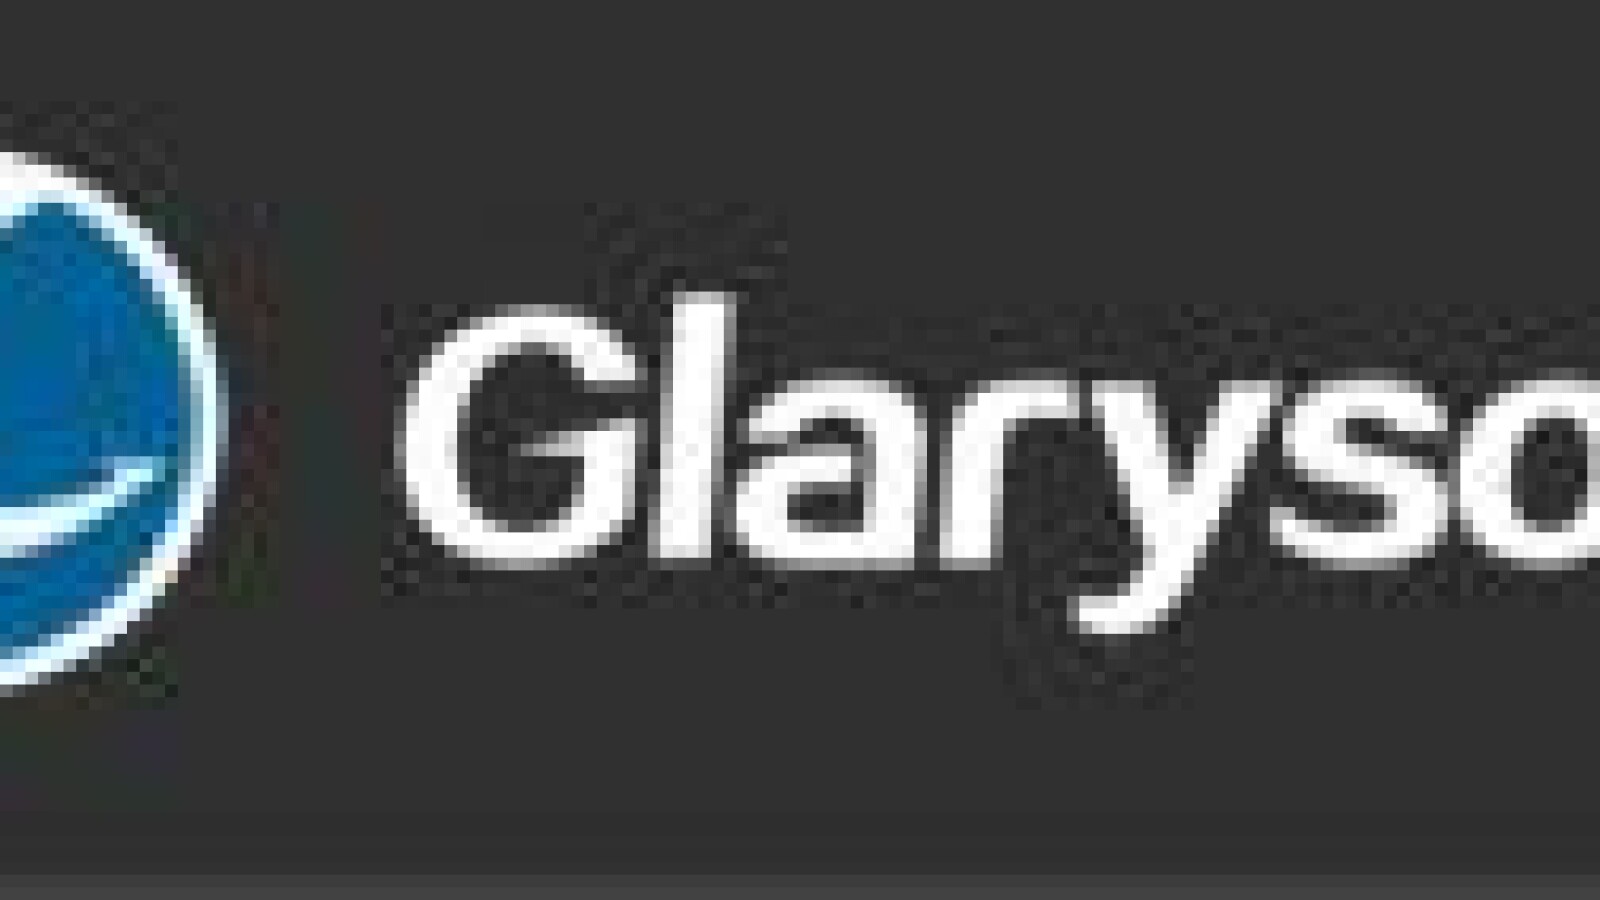 Glary Tracks Eraser 5.0.1.262 download the last version for ipod